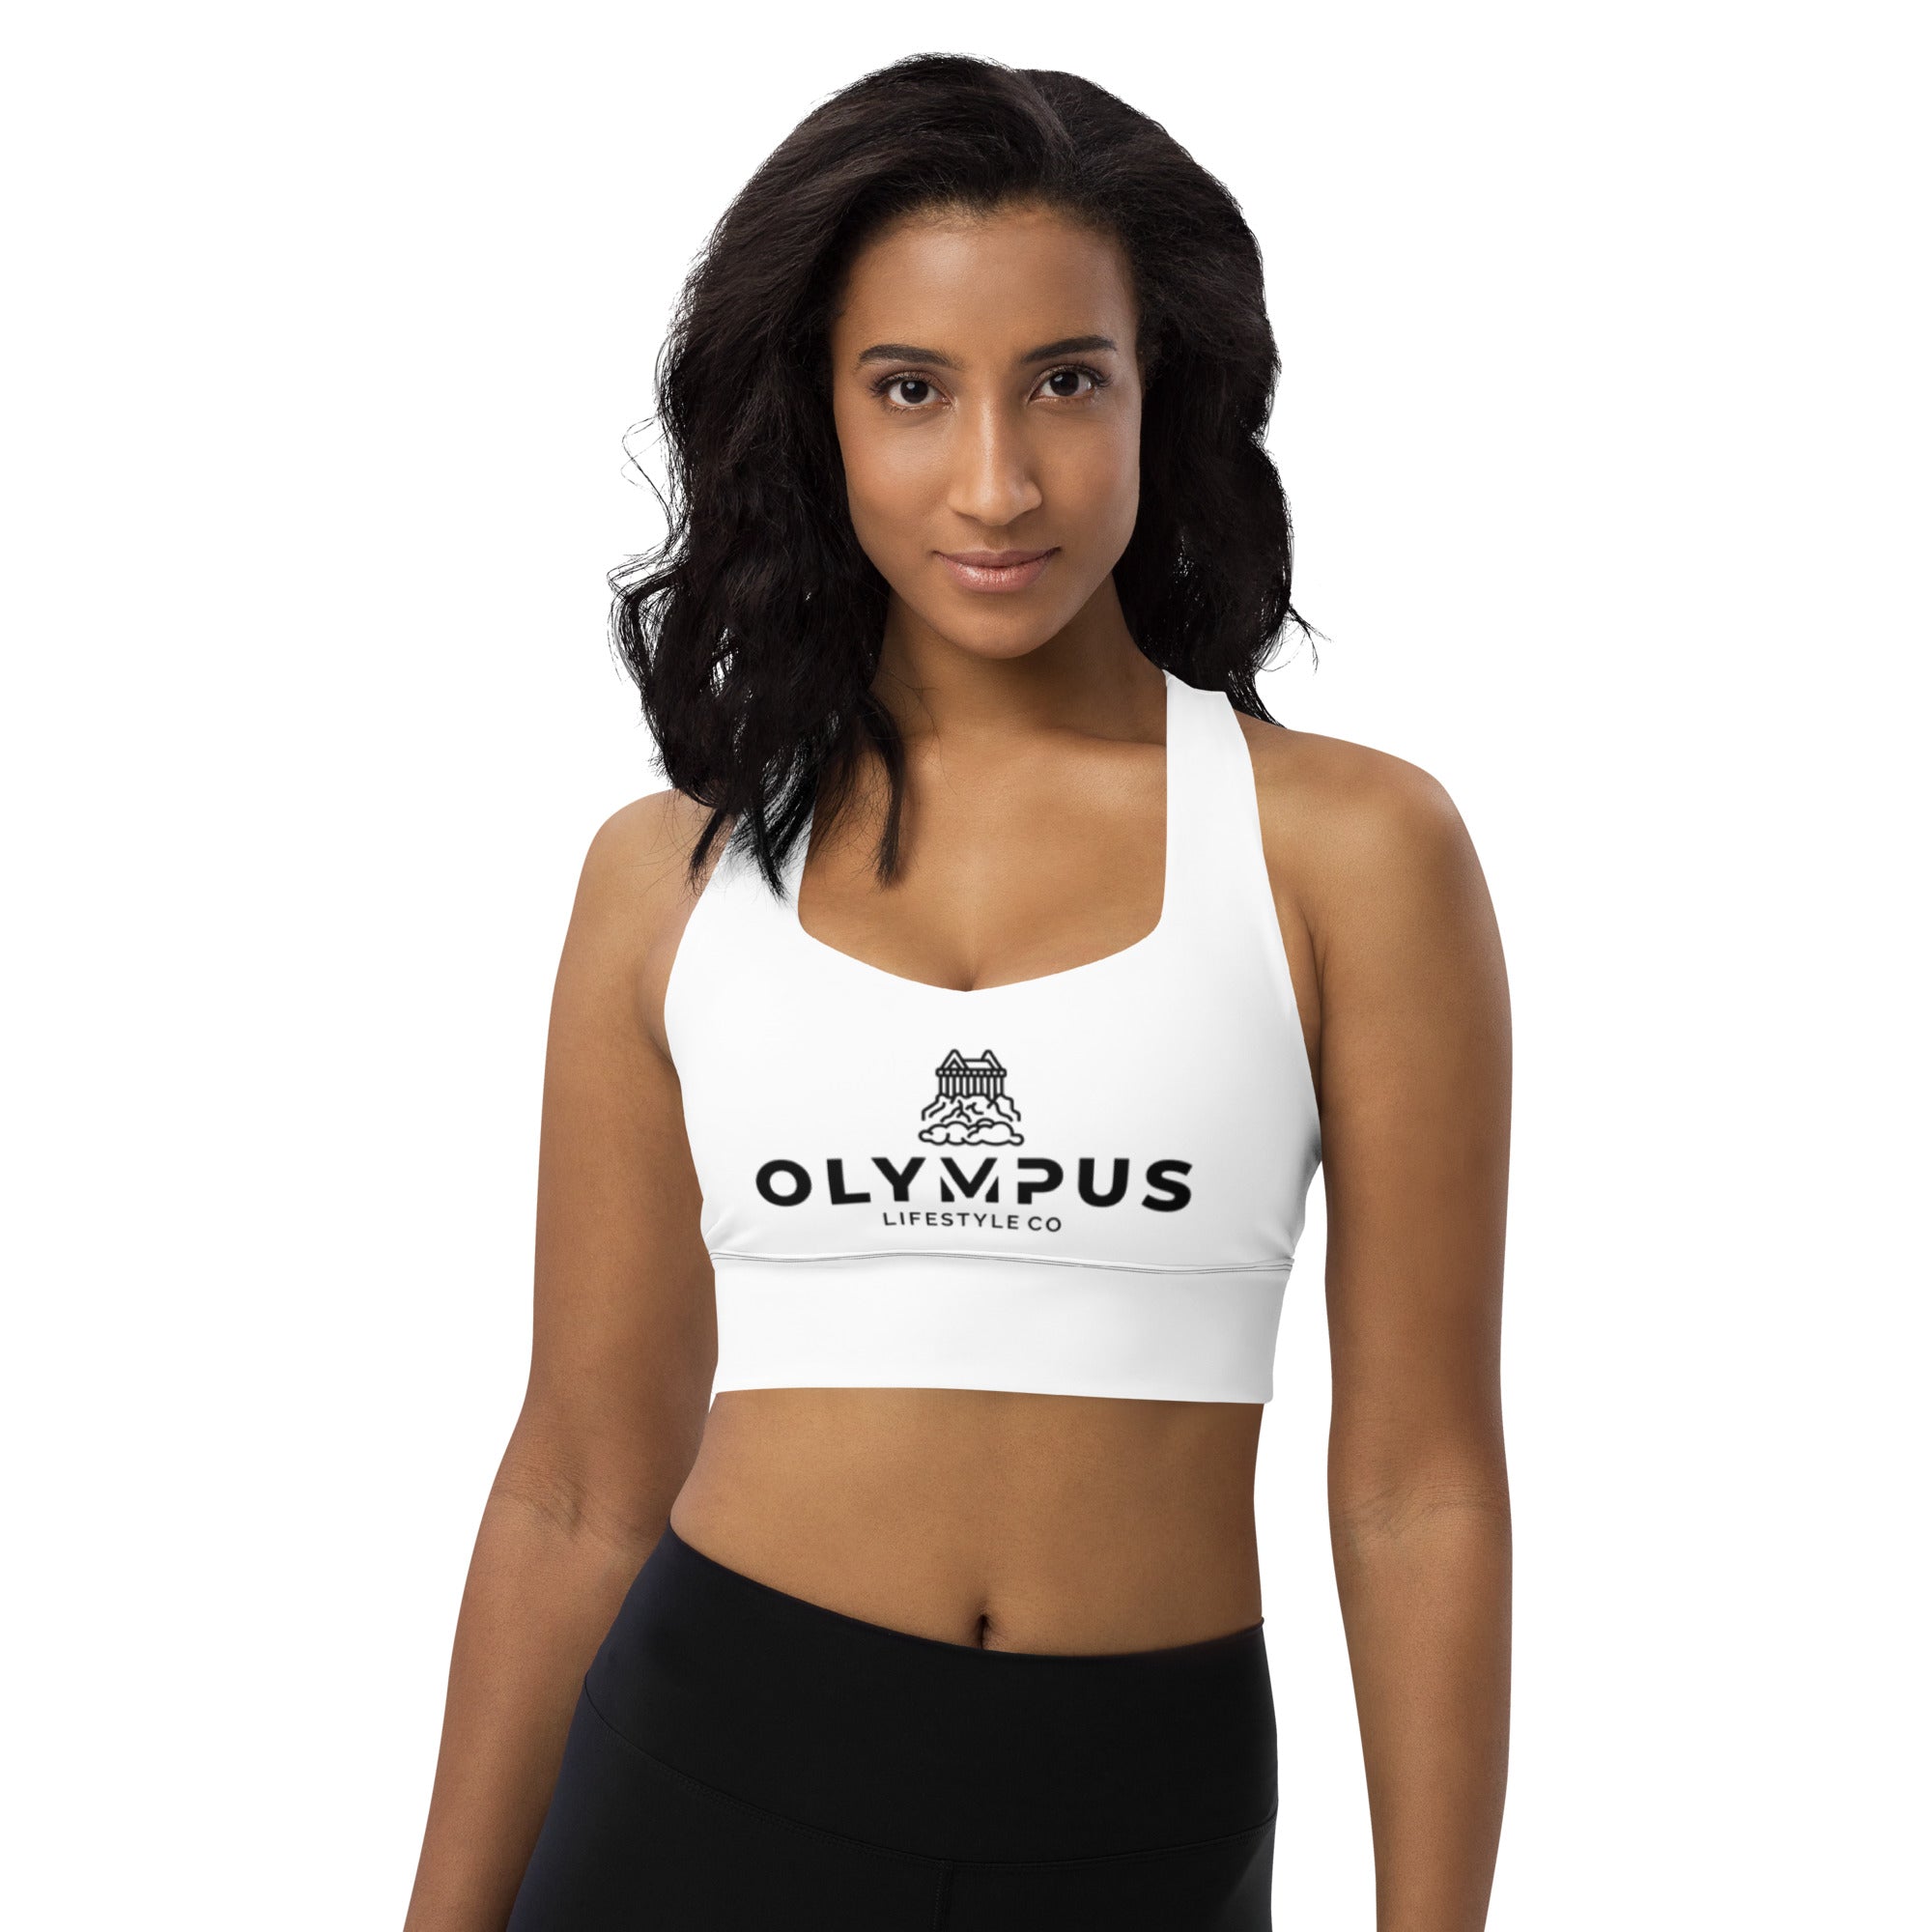 Olympus Women's White Longline Sports Bra Black Logo